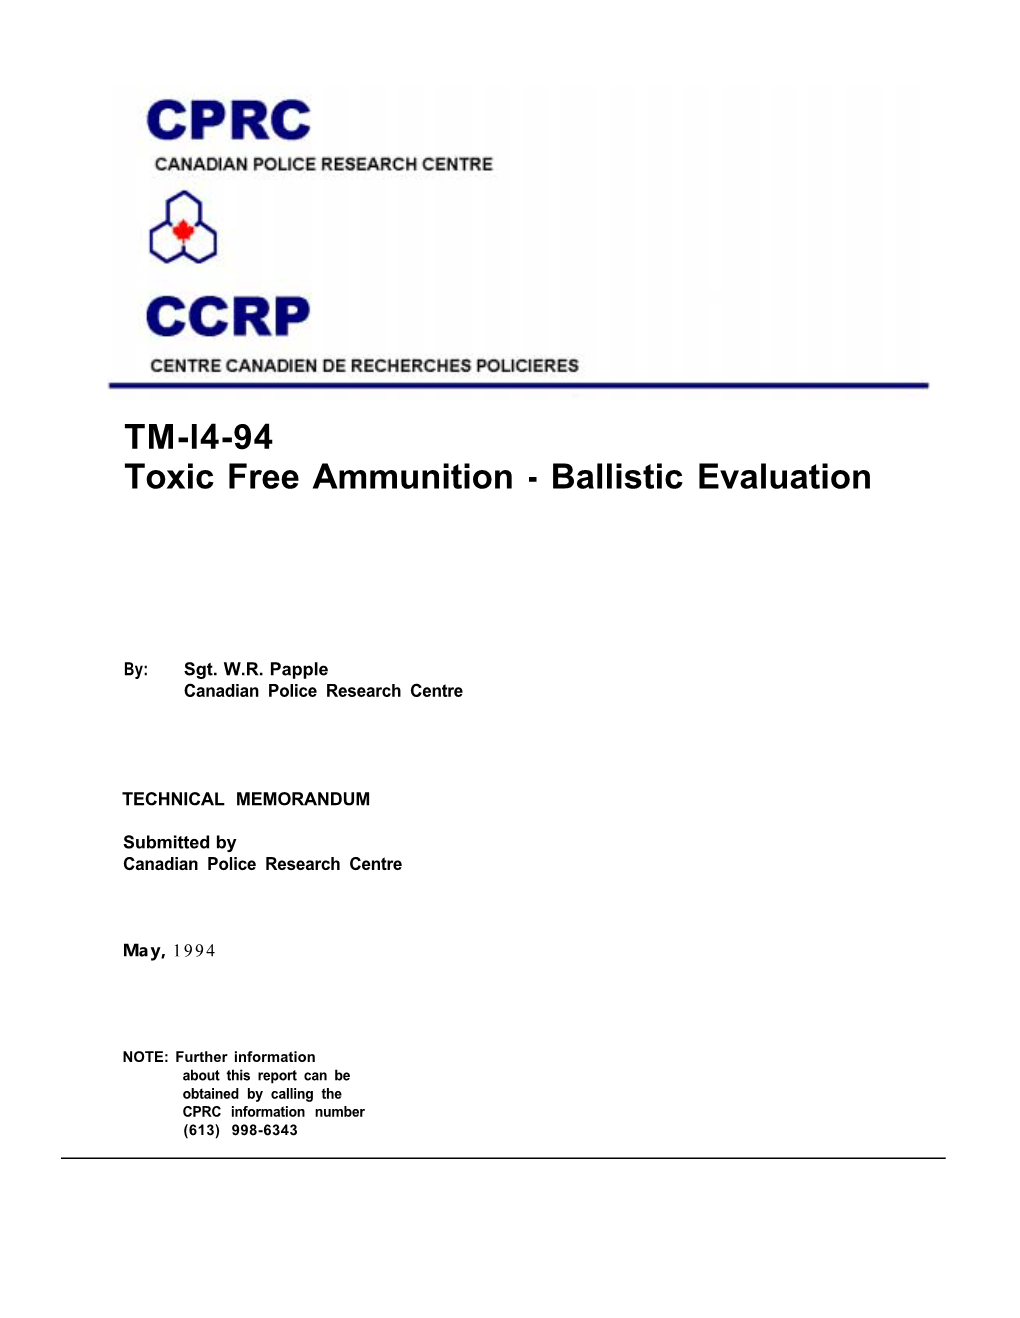 TM-L4-94 Toxic Free Ammunition - Ballistic Evaluation